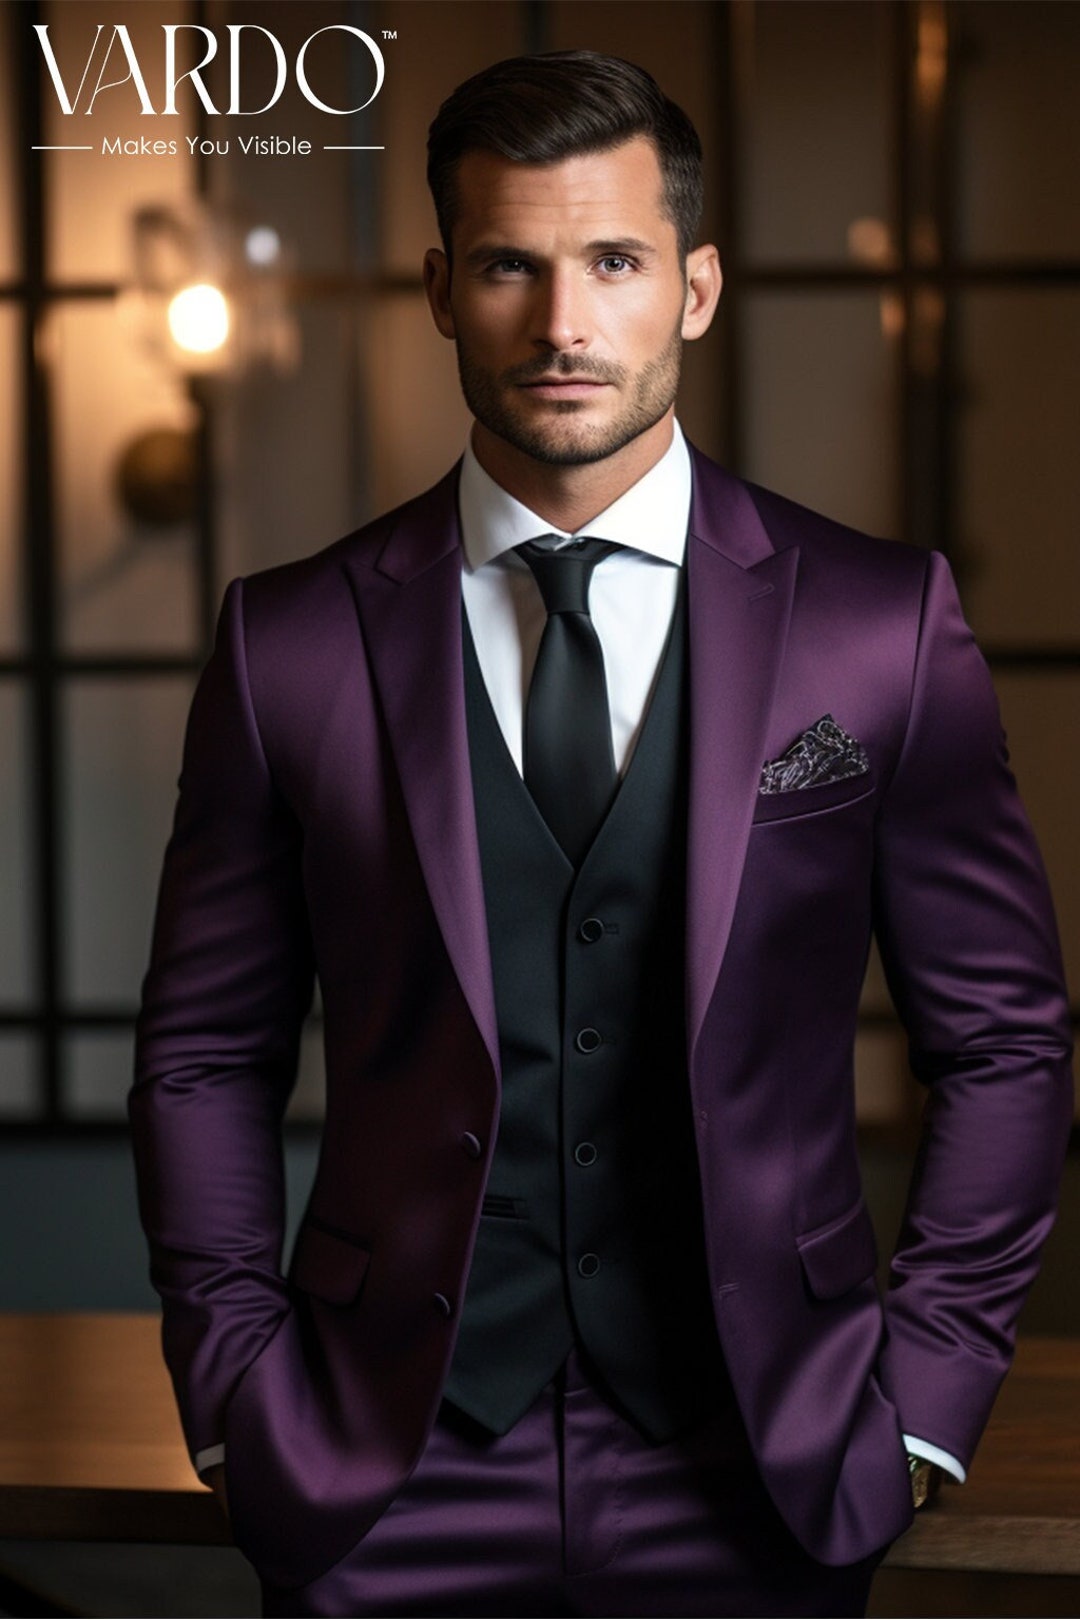 Elegant Men's Purple Tuxedo Suit Stylish Wedding & Formal Attire ...